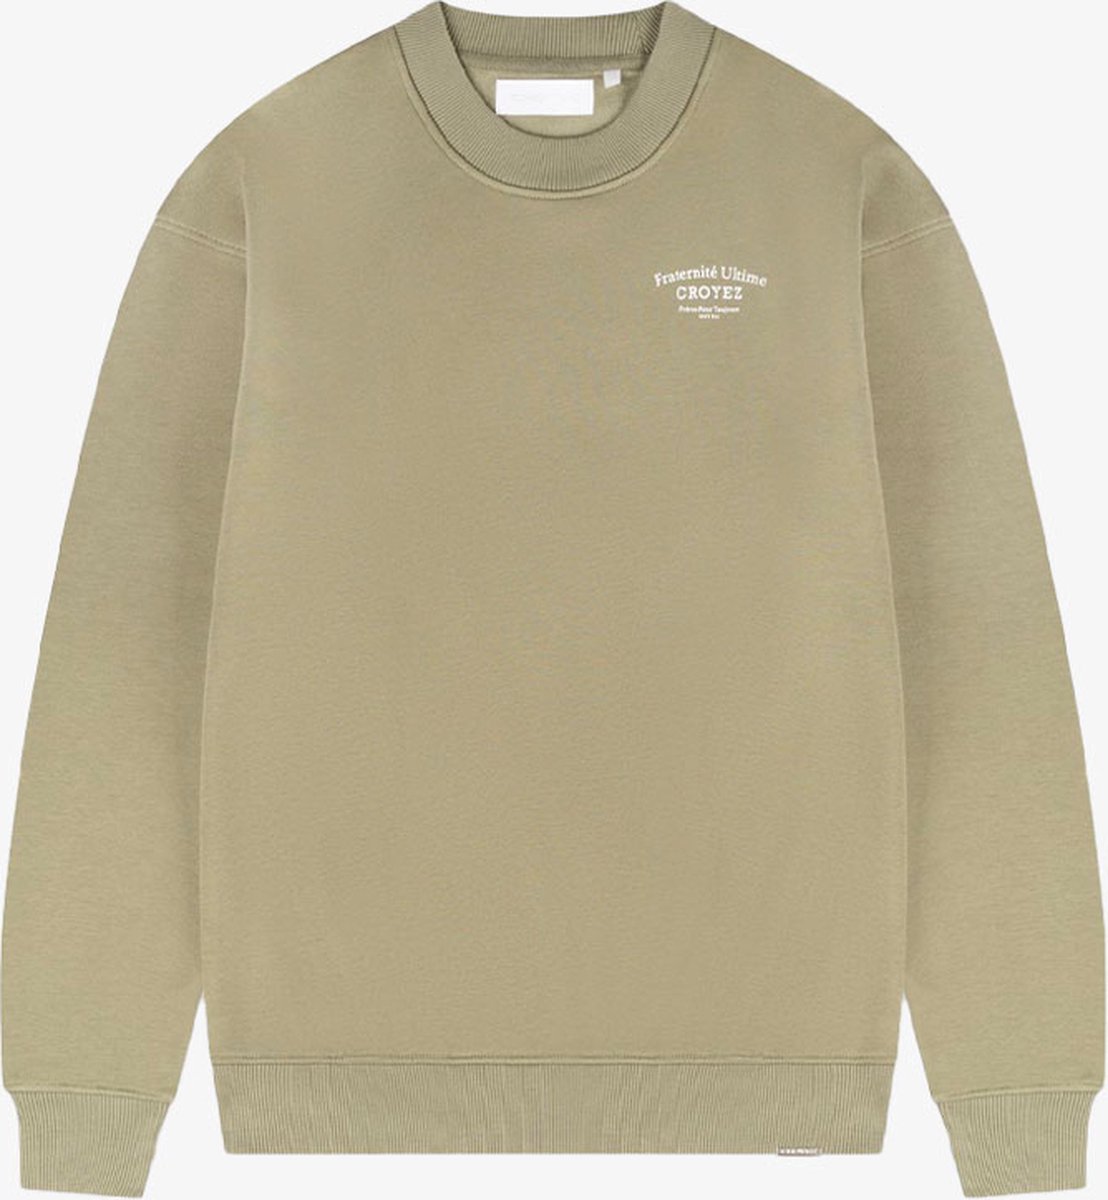 Croyez Fraternite Sweater - Groen - XL